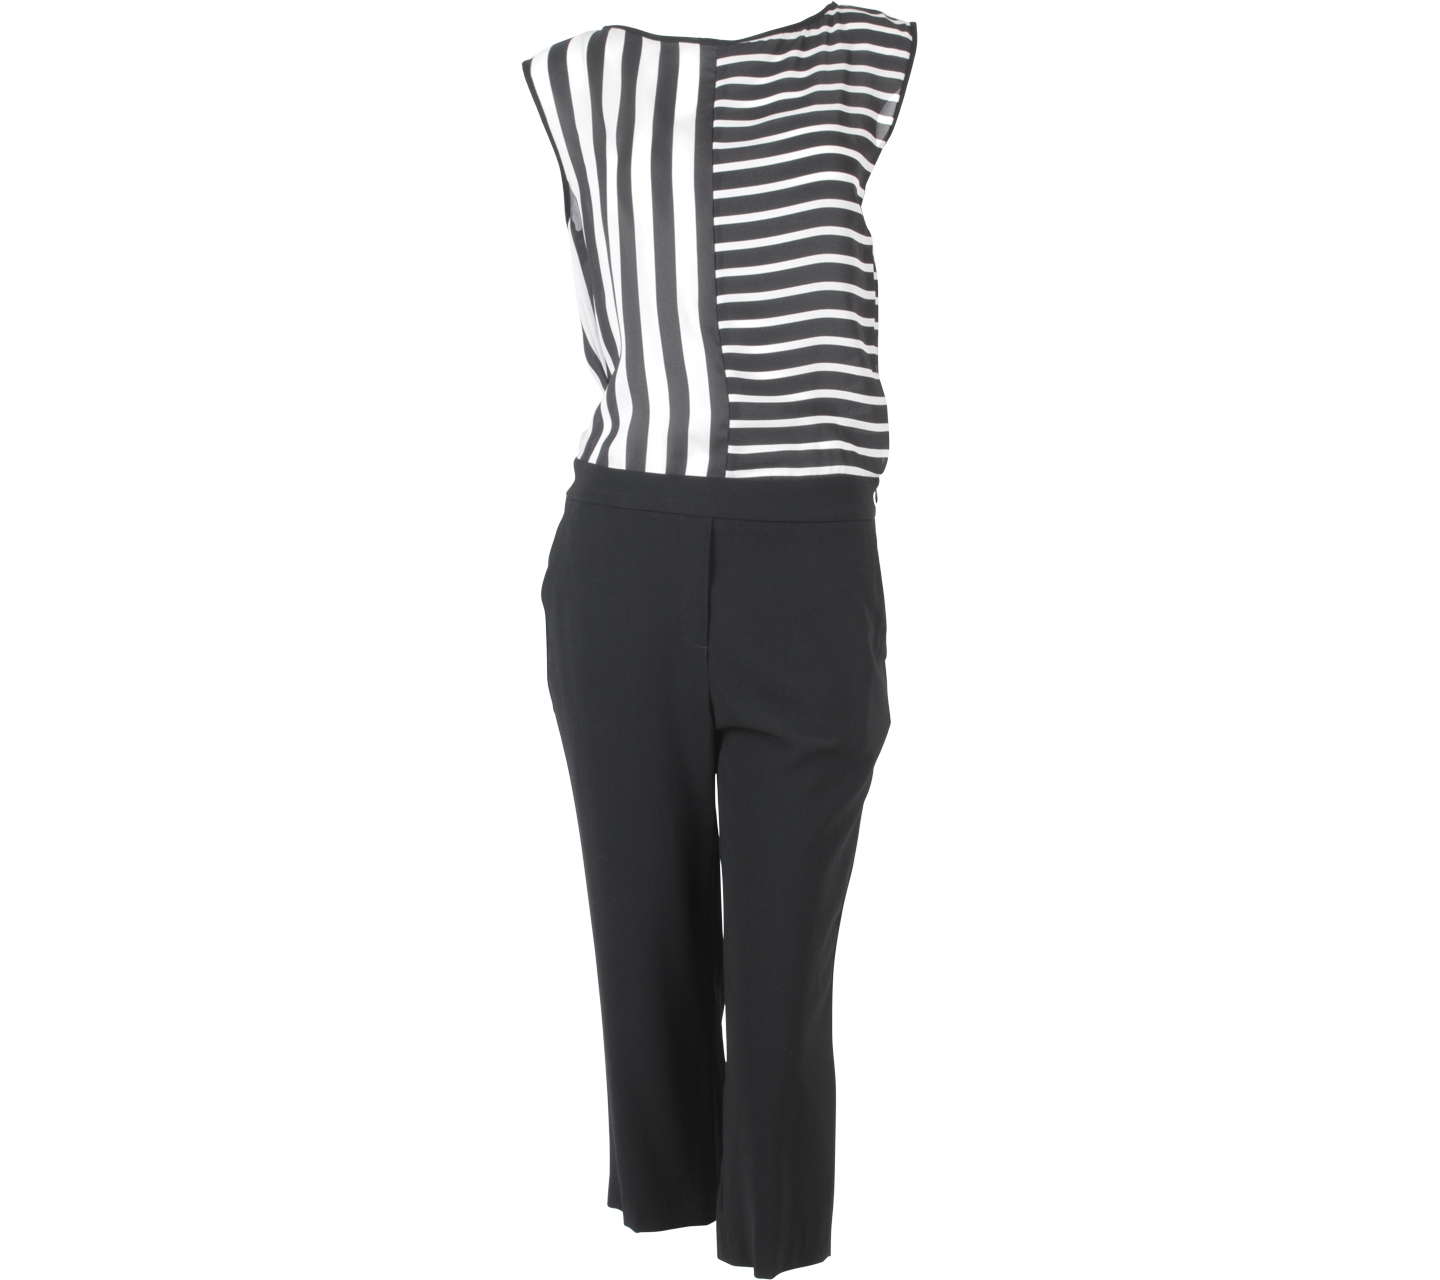 Zara Black And White Striped Jumpsuit